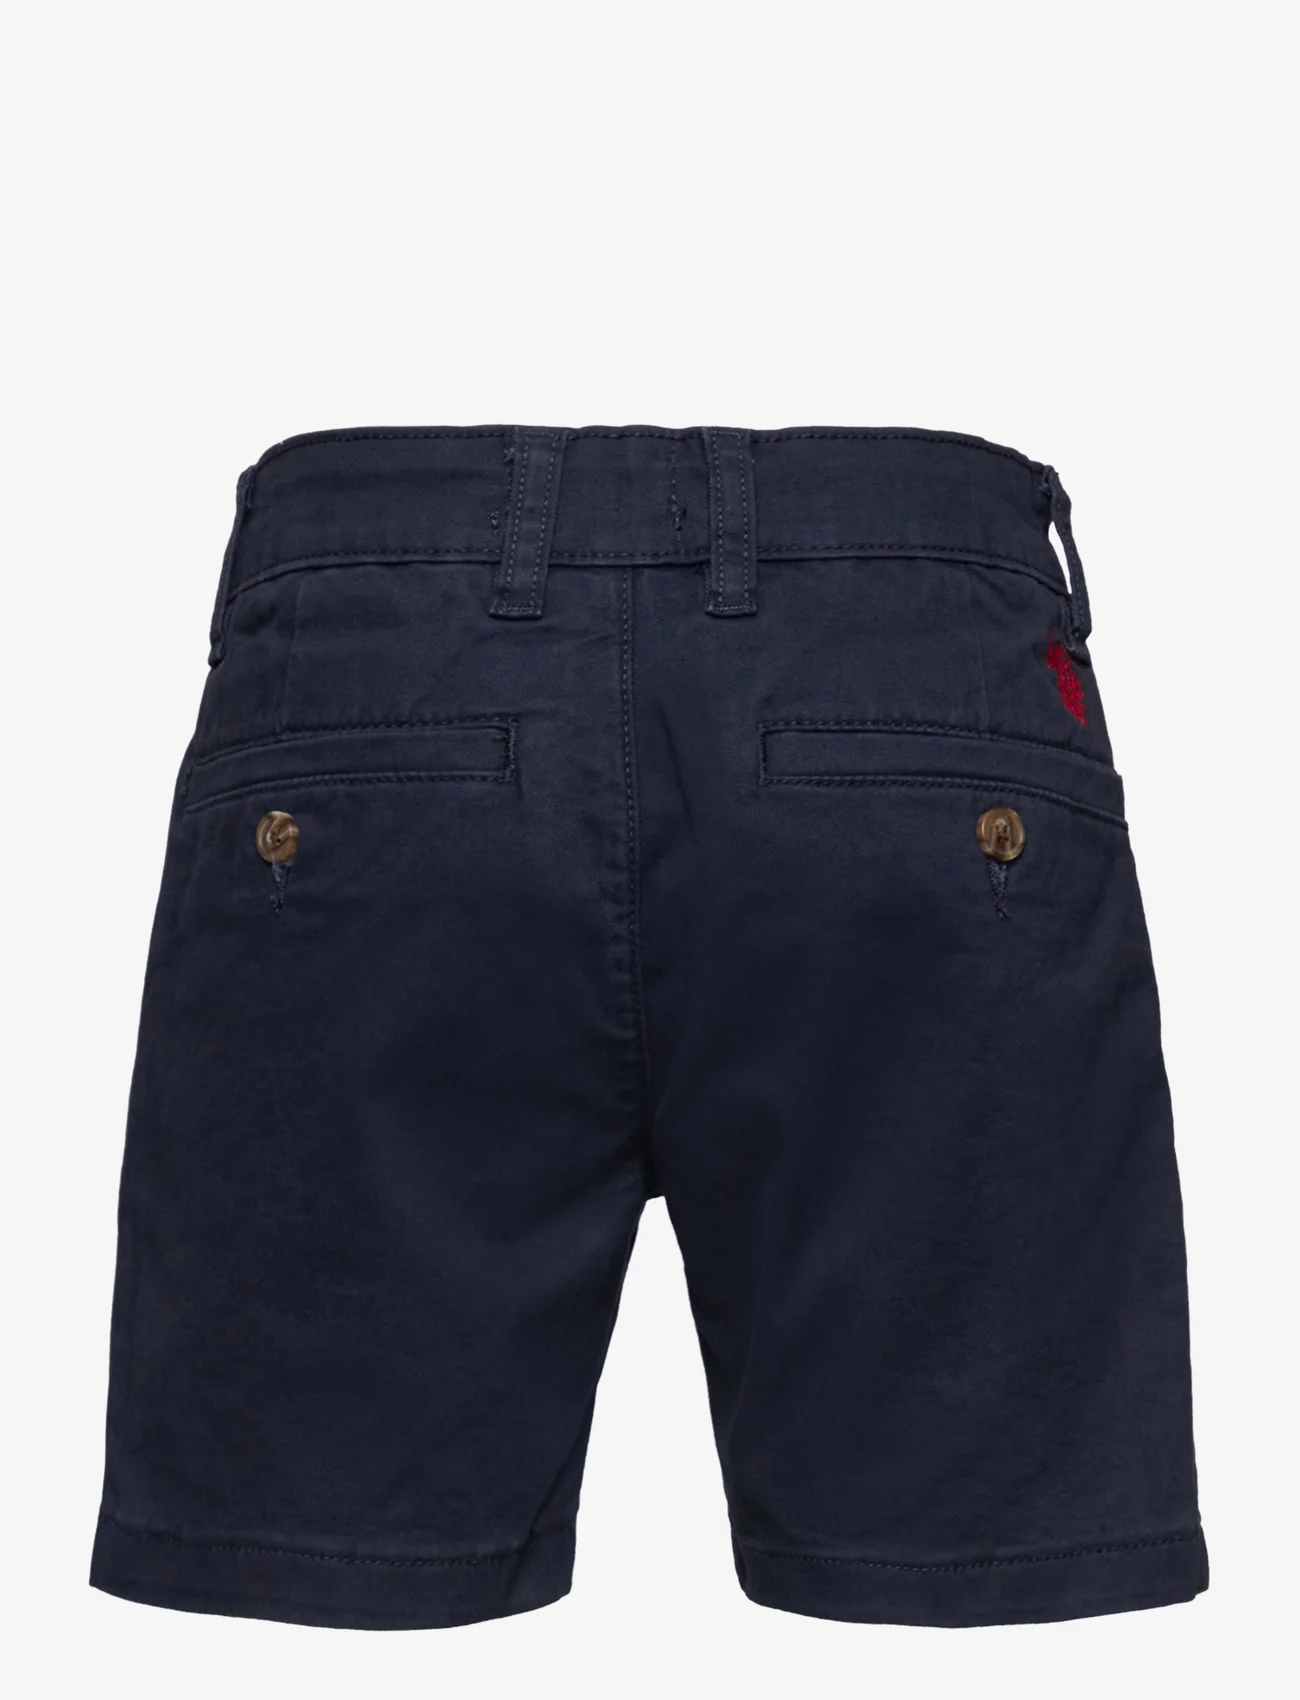 U.S. Polo Assn. - USPA Classic Chino Shorts - „chino“ stiliaus šortai - dark sapphire navy / haute red dhm - 1